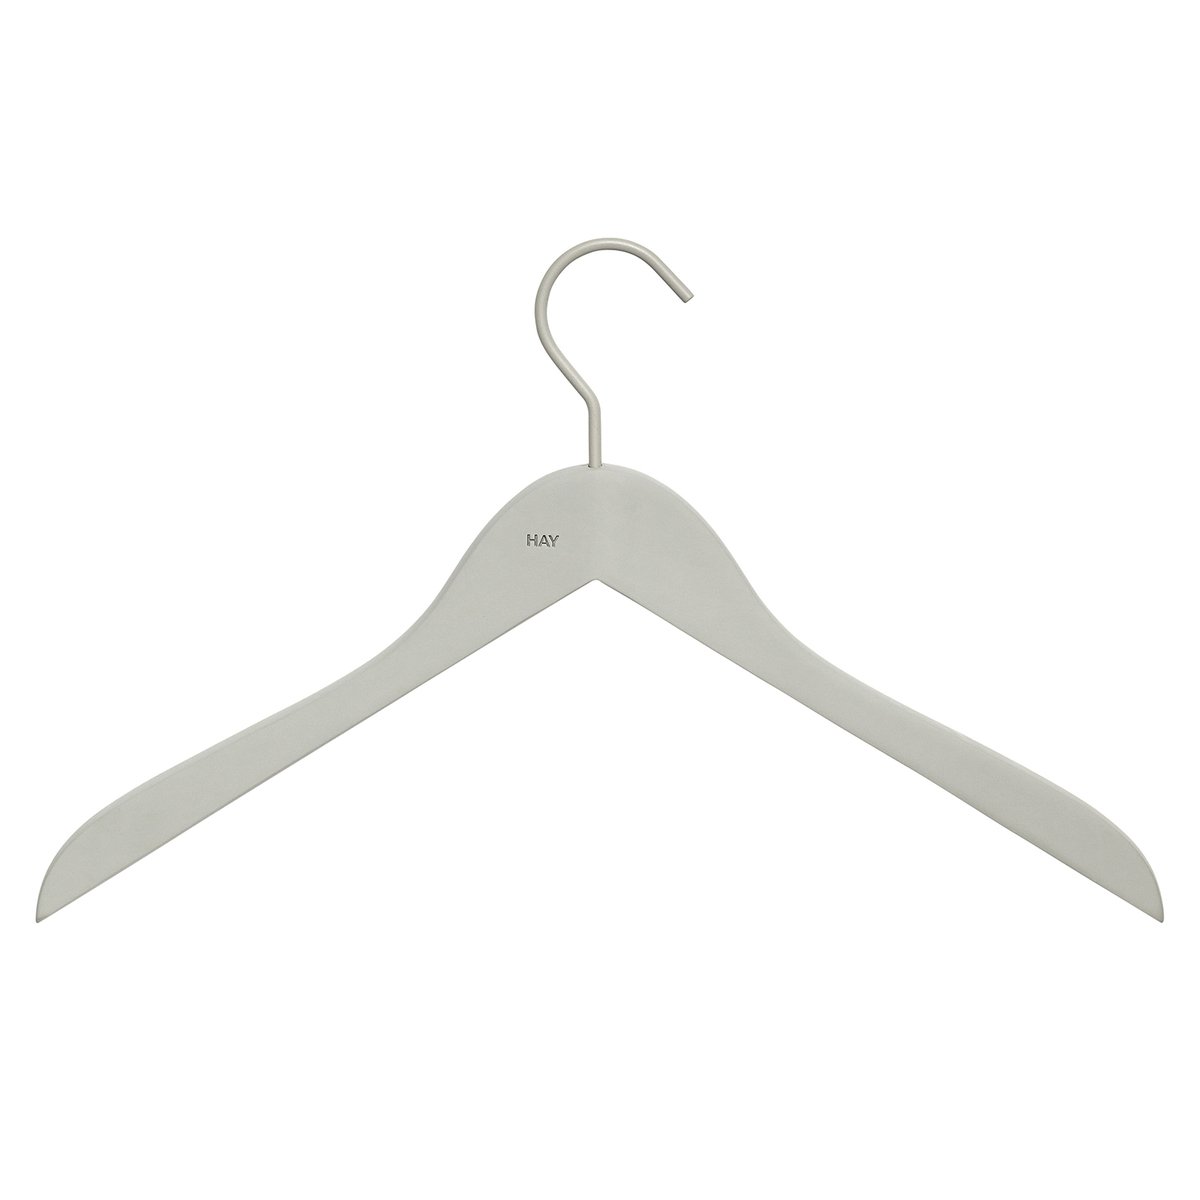 HAY Soft Coat Hangers - 4 Pack Black